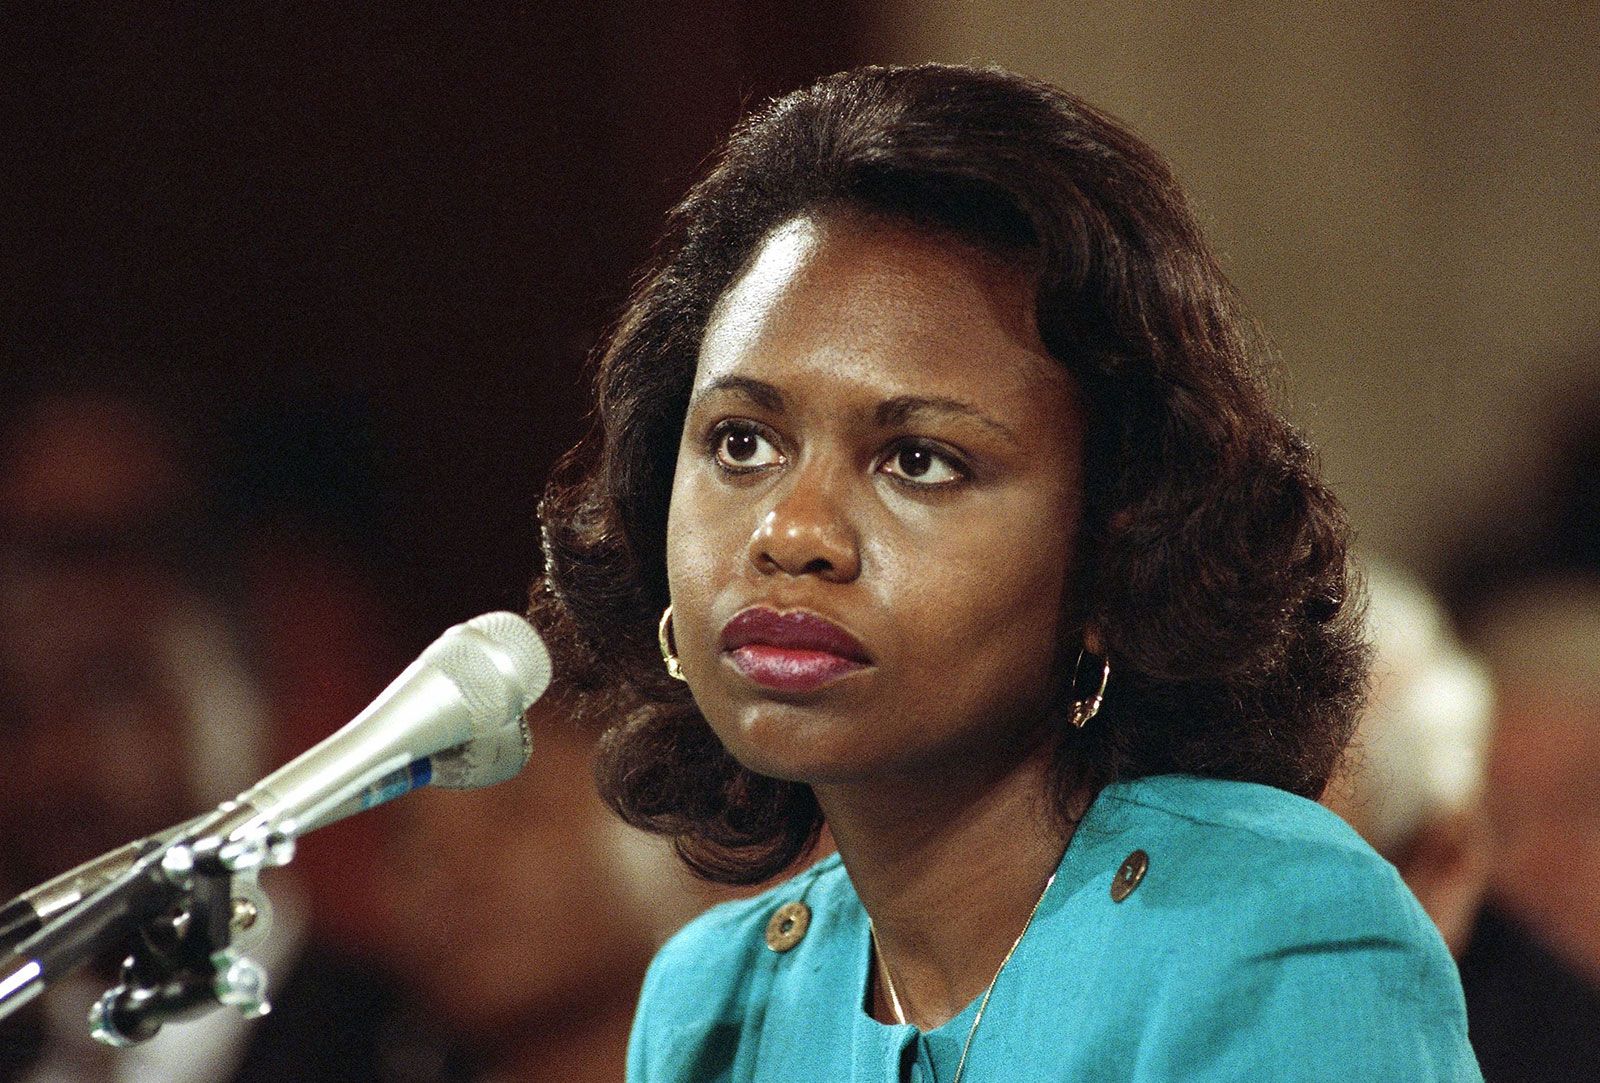 Anita-Hill-Clarence-Thomas-confirmation-hearings-Senate-October-1991.jpg